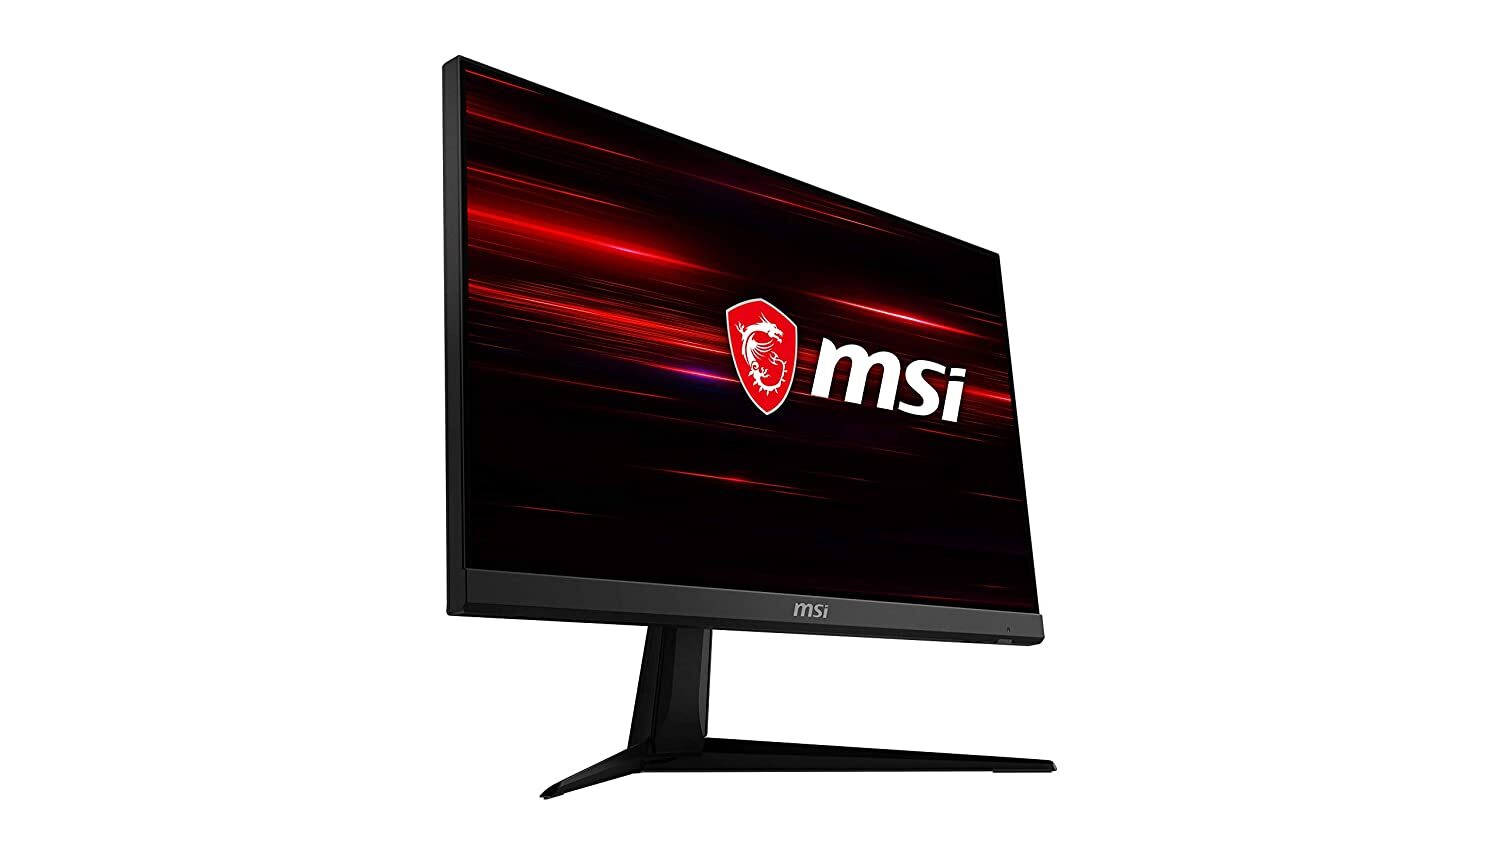 MSI 24” FHD (1920 x 1080) Non-Glare with Super Narrow Bezel 144Hz 1ms 16:9 HDMI/DP AMD Radeon FreeSync IPS Gaming Monitor (OPTIX G241), Black